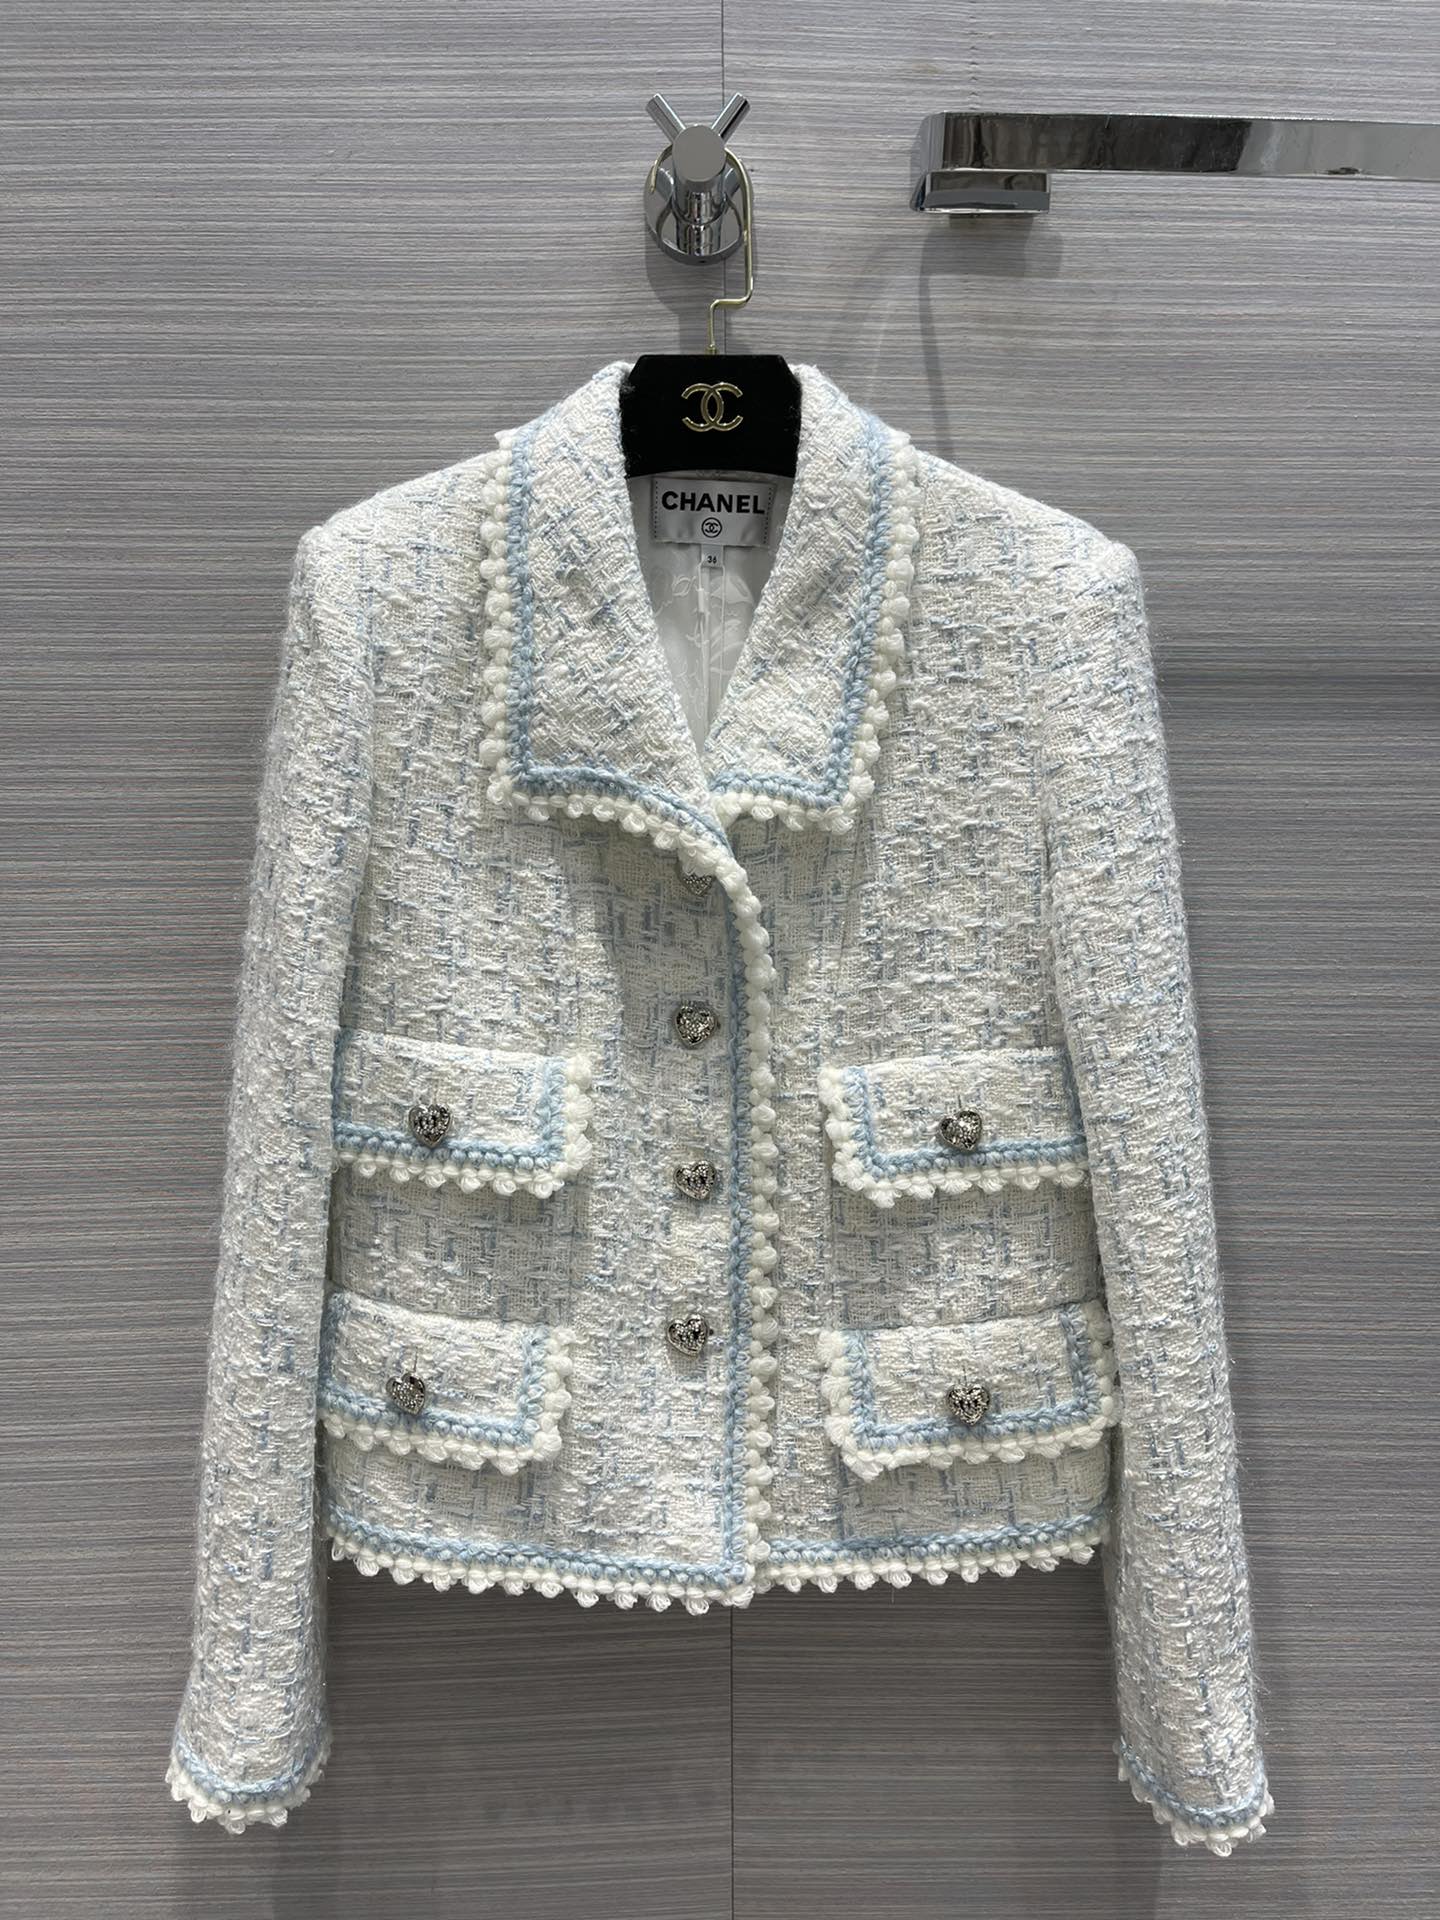 Coco Chanel Inspired Boucle Tweed Box Jacket Blazer Lilac